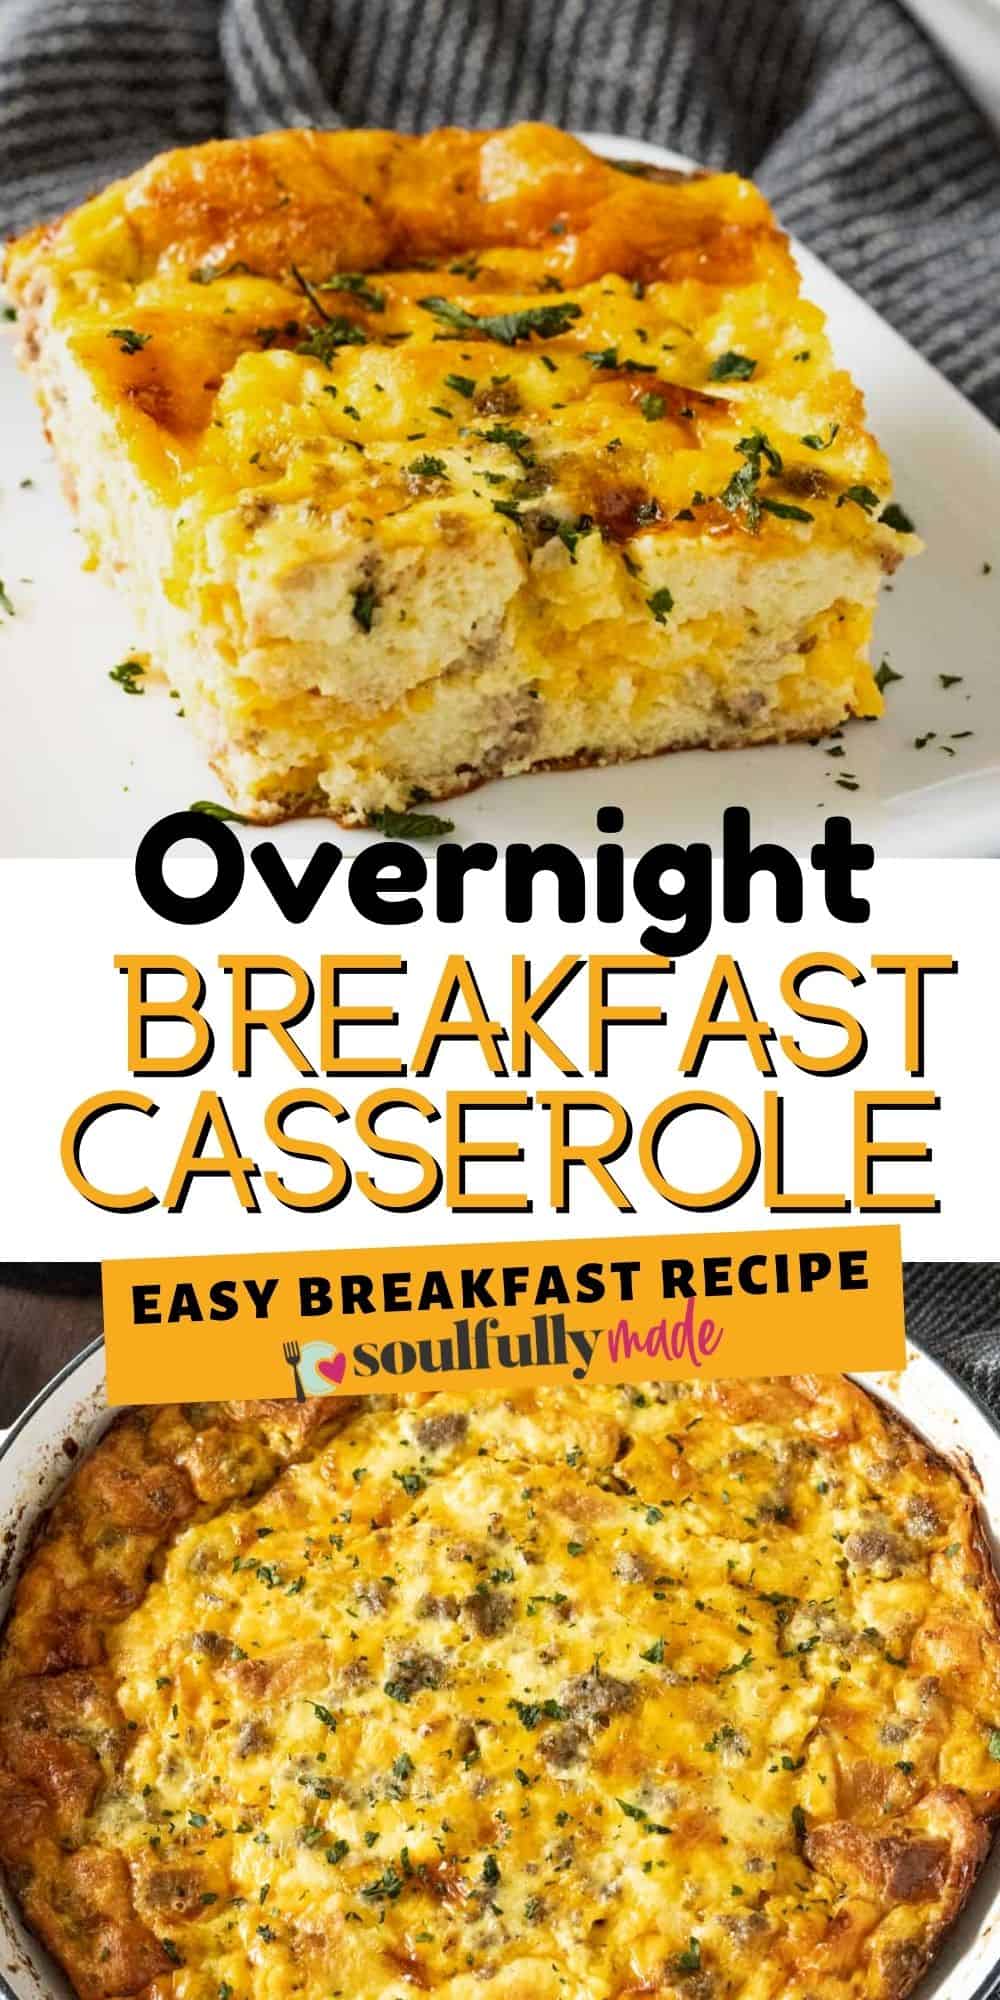 Overnight Breakfast Casserole - Soulfully Made